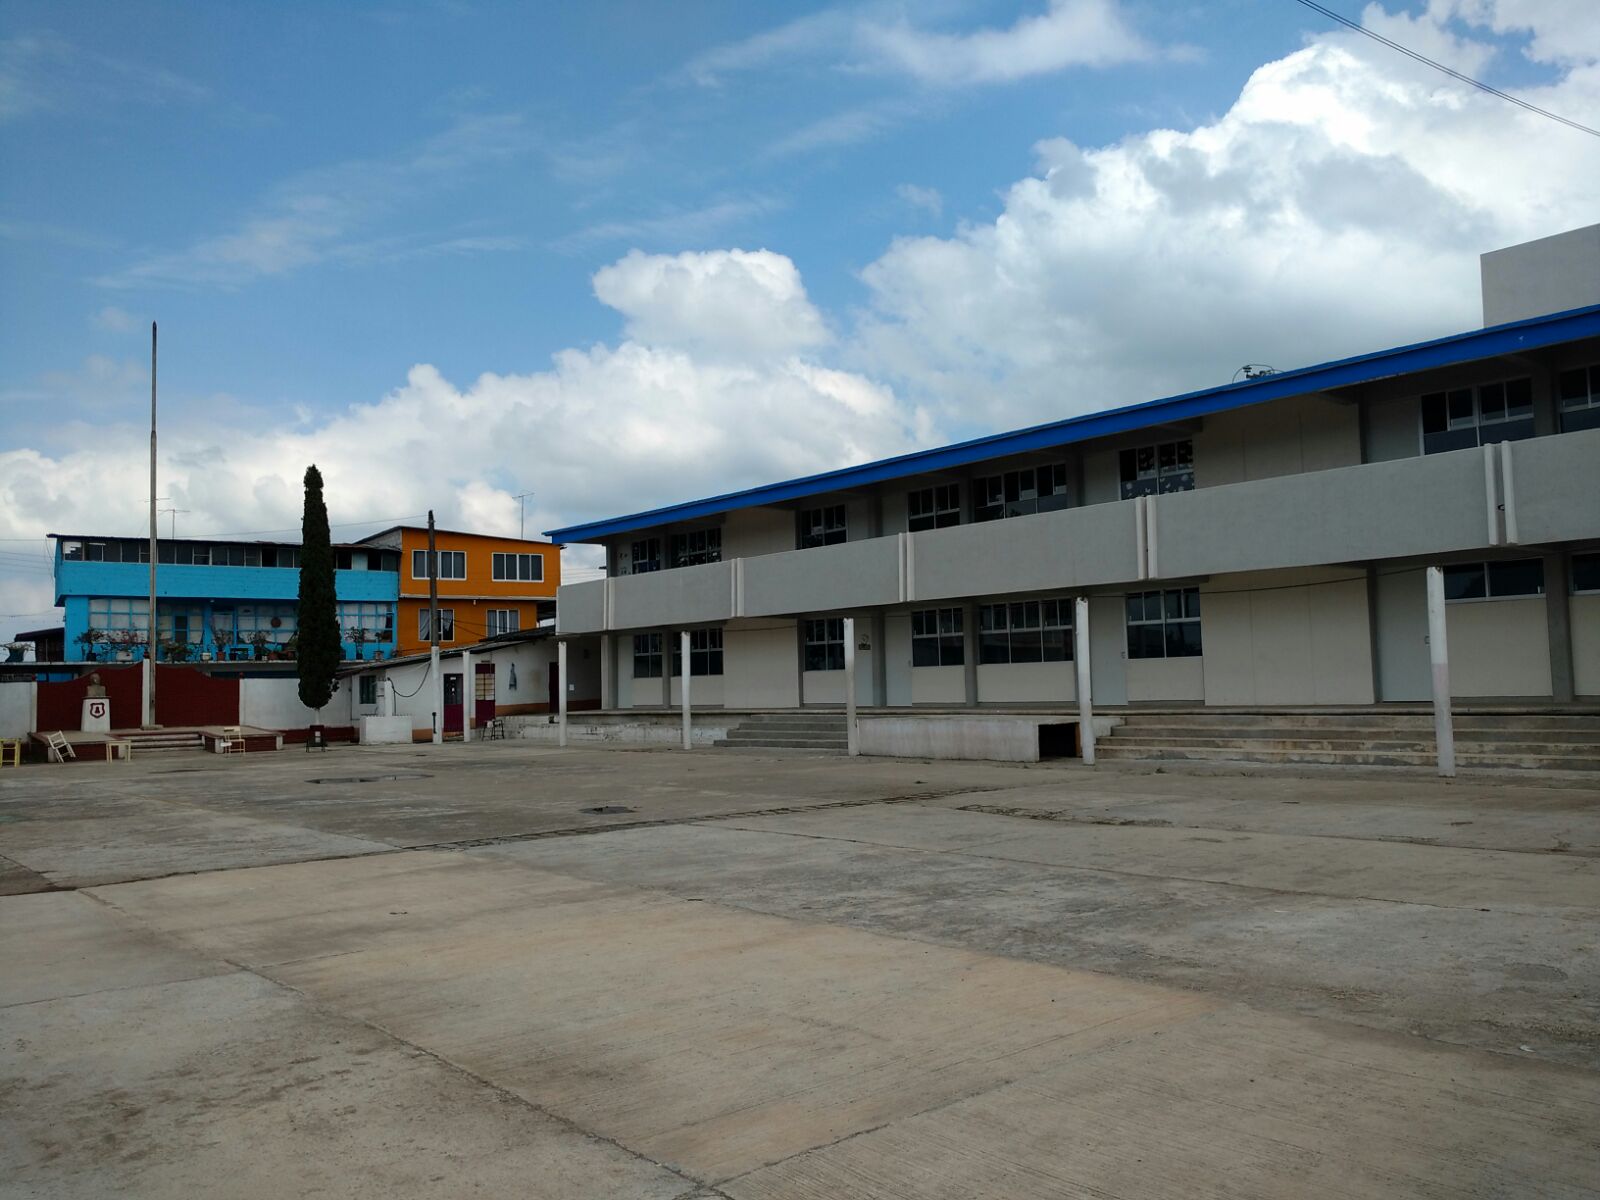 Drenaje tapado deja sin clases a 400 alumnos en Huauchinango